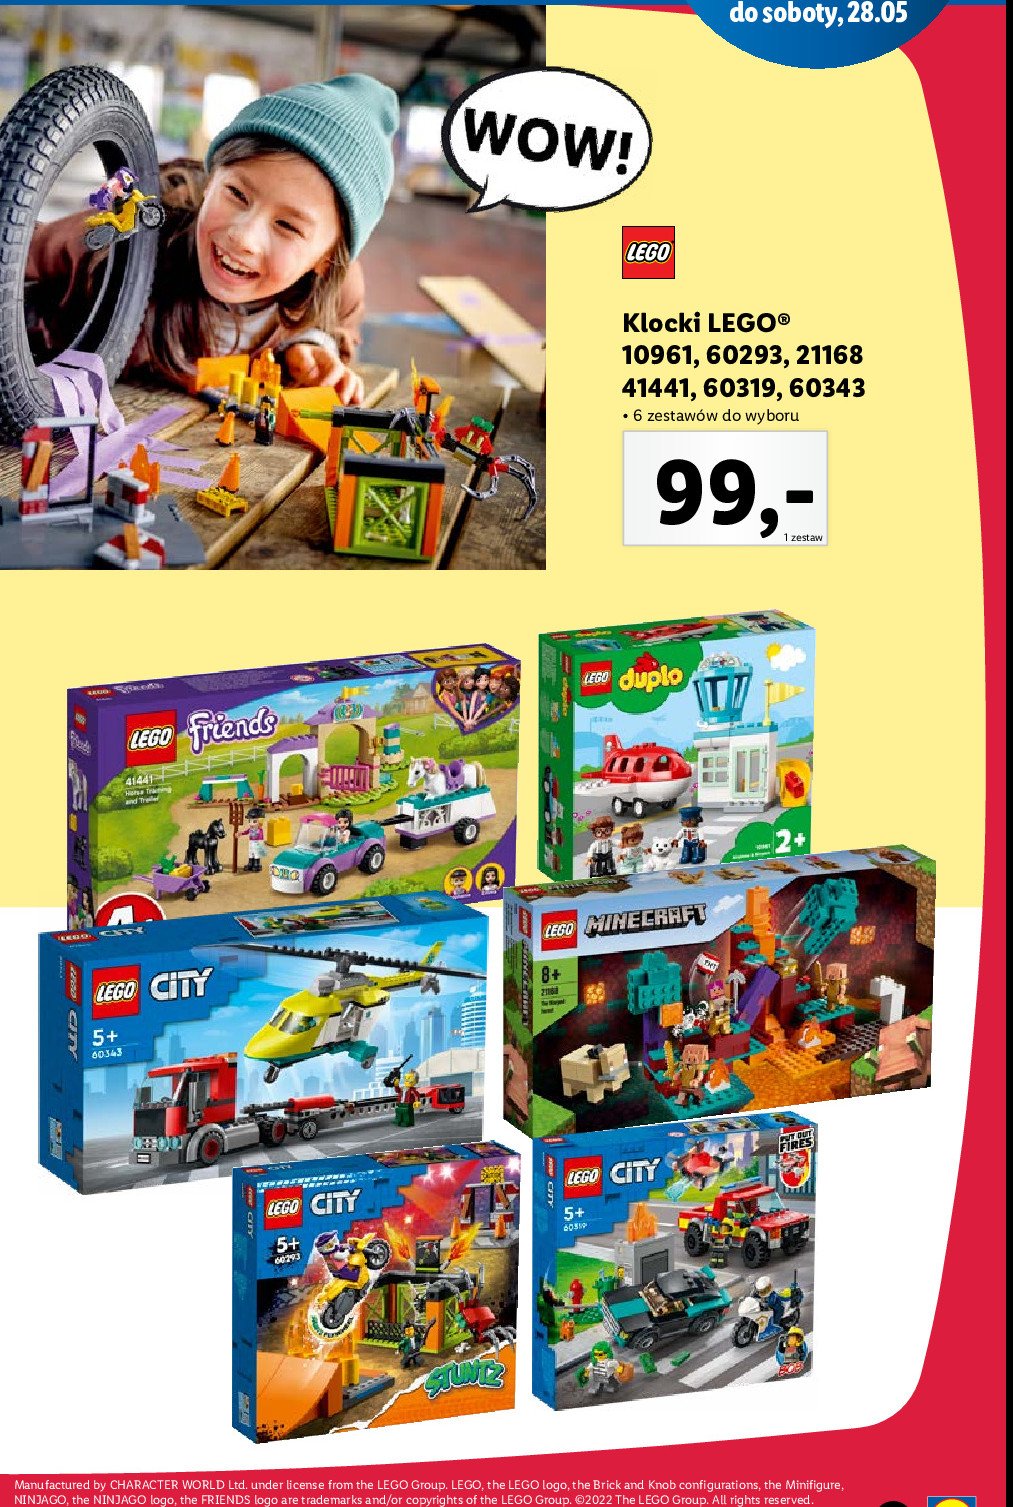 Klocki 21168 Lego minecraft promocje